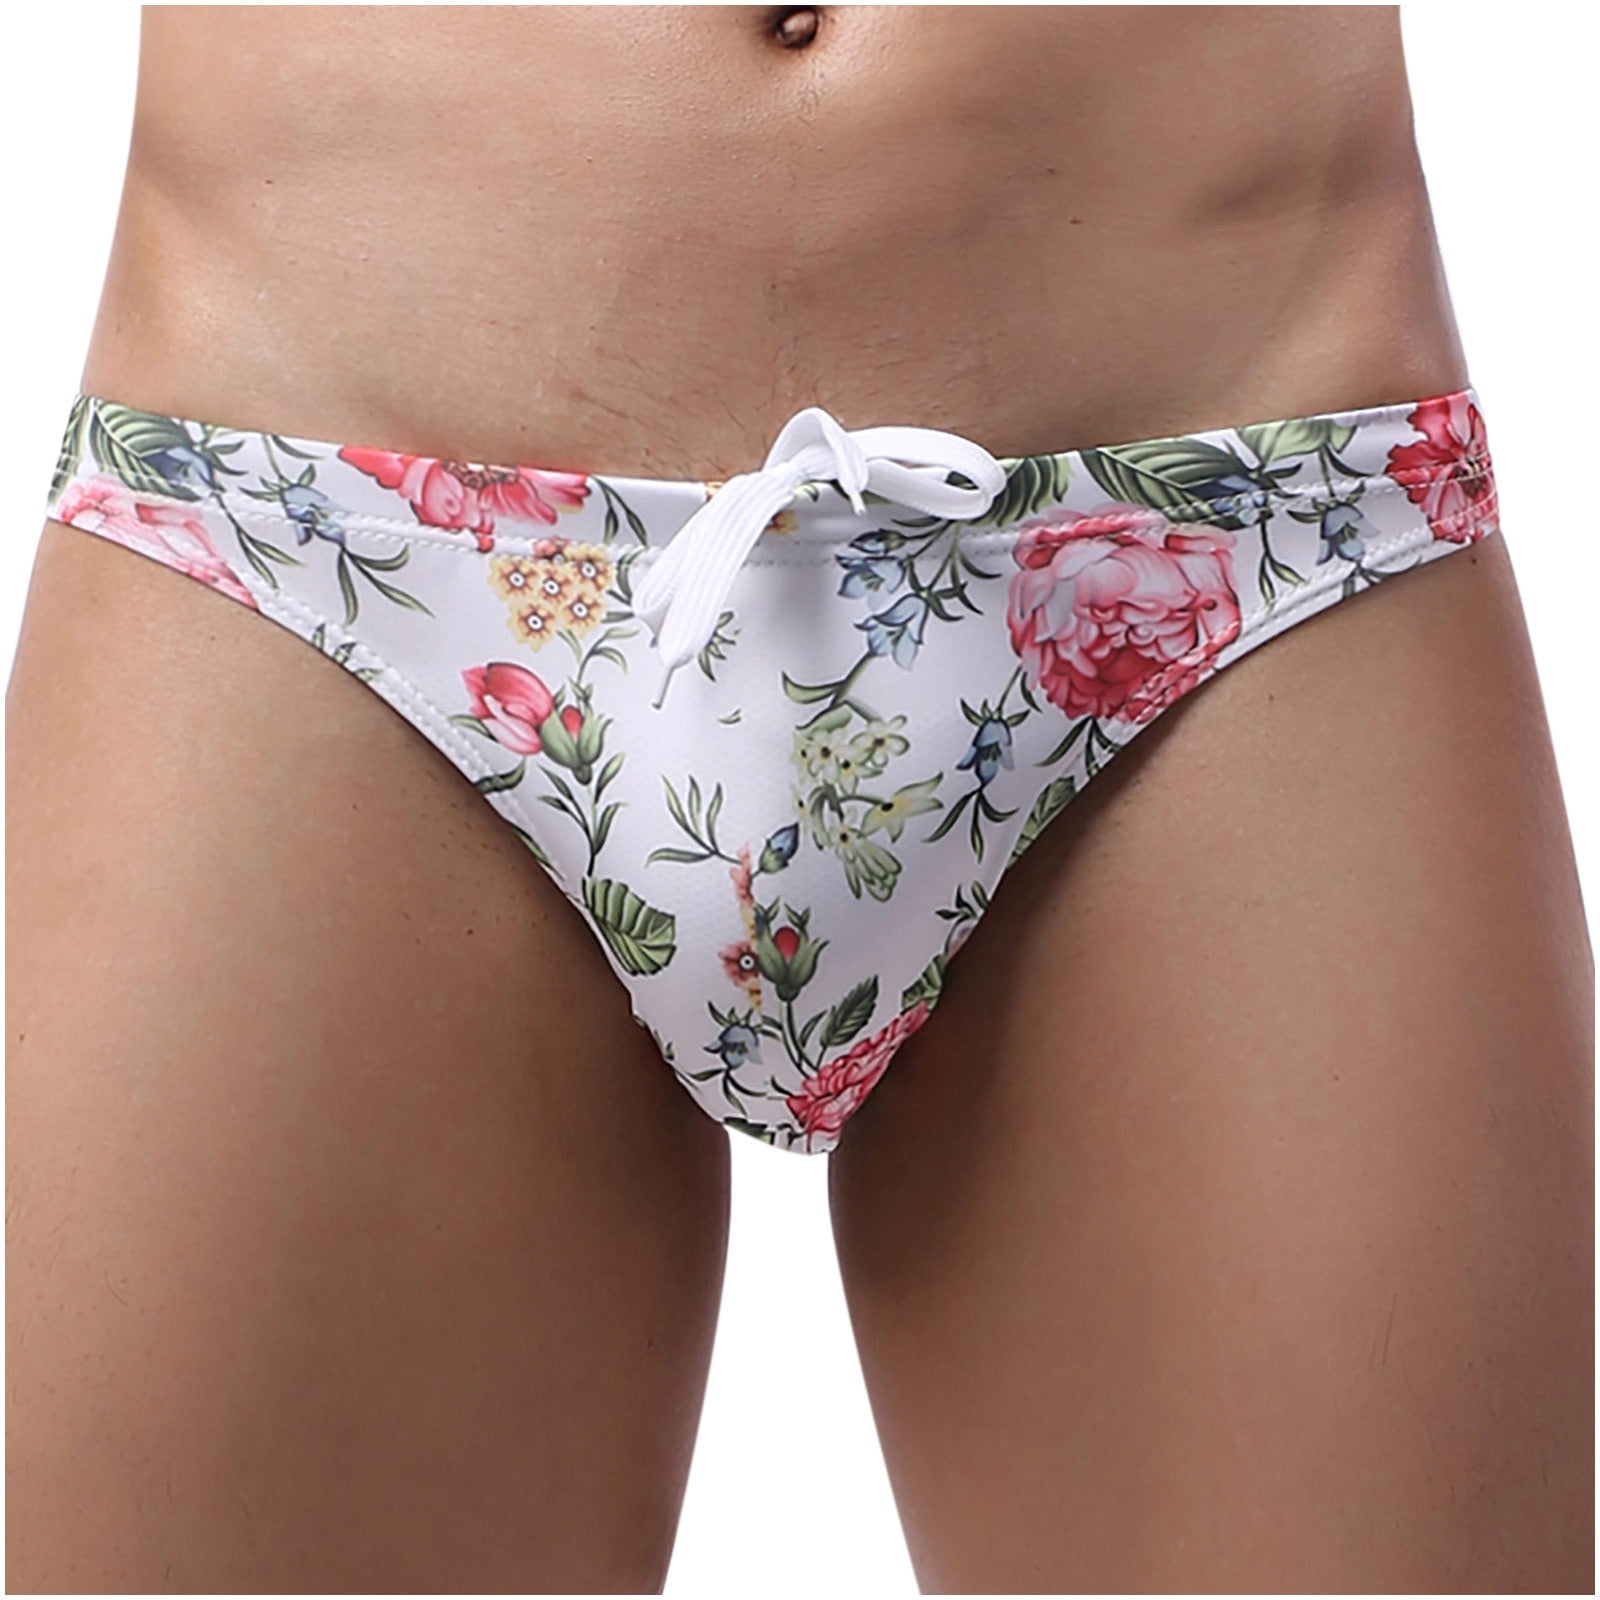 Mrat Seamless Briefs Colorful Panty for Women Men's Underwear Swim